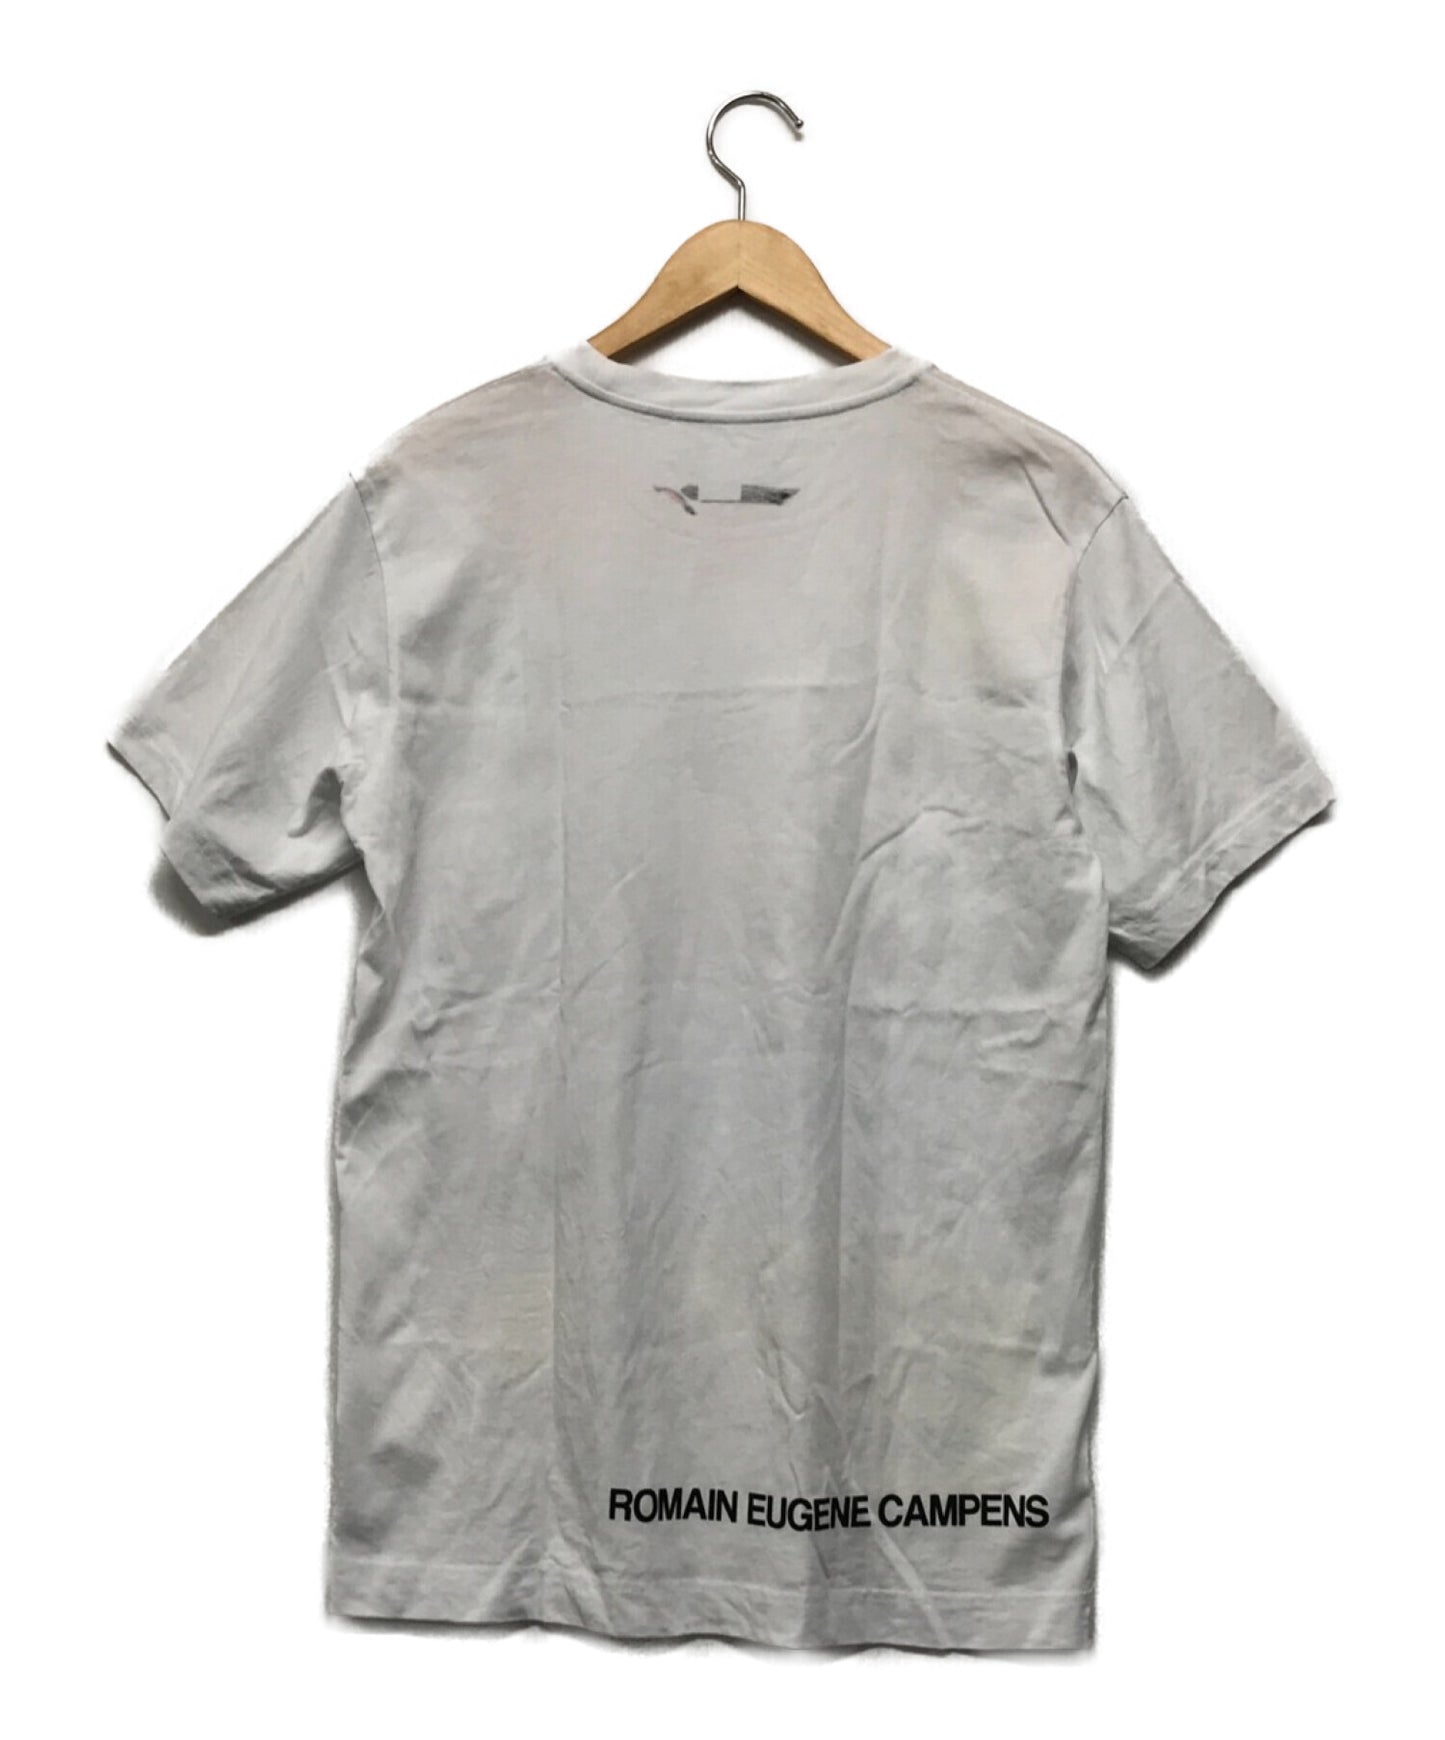 Comme des Garcons衬衫Romain Eugene T恤 /切割 /缝制 /短袖T恤 / S / S切割和缝制 /印刷切割和缝制EG-T100